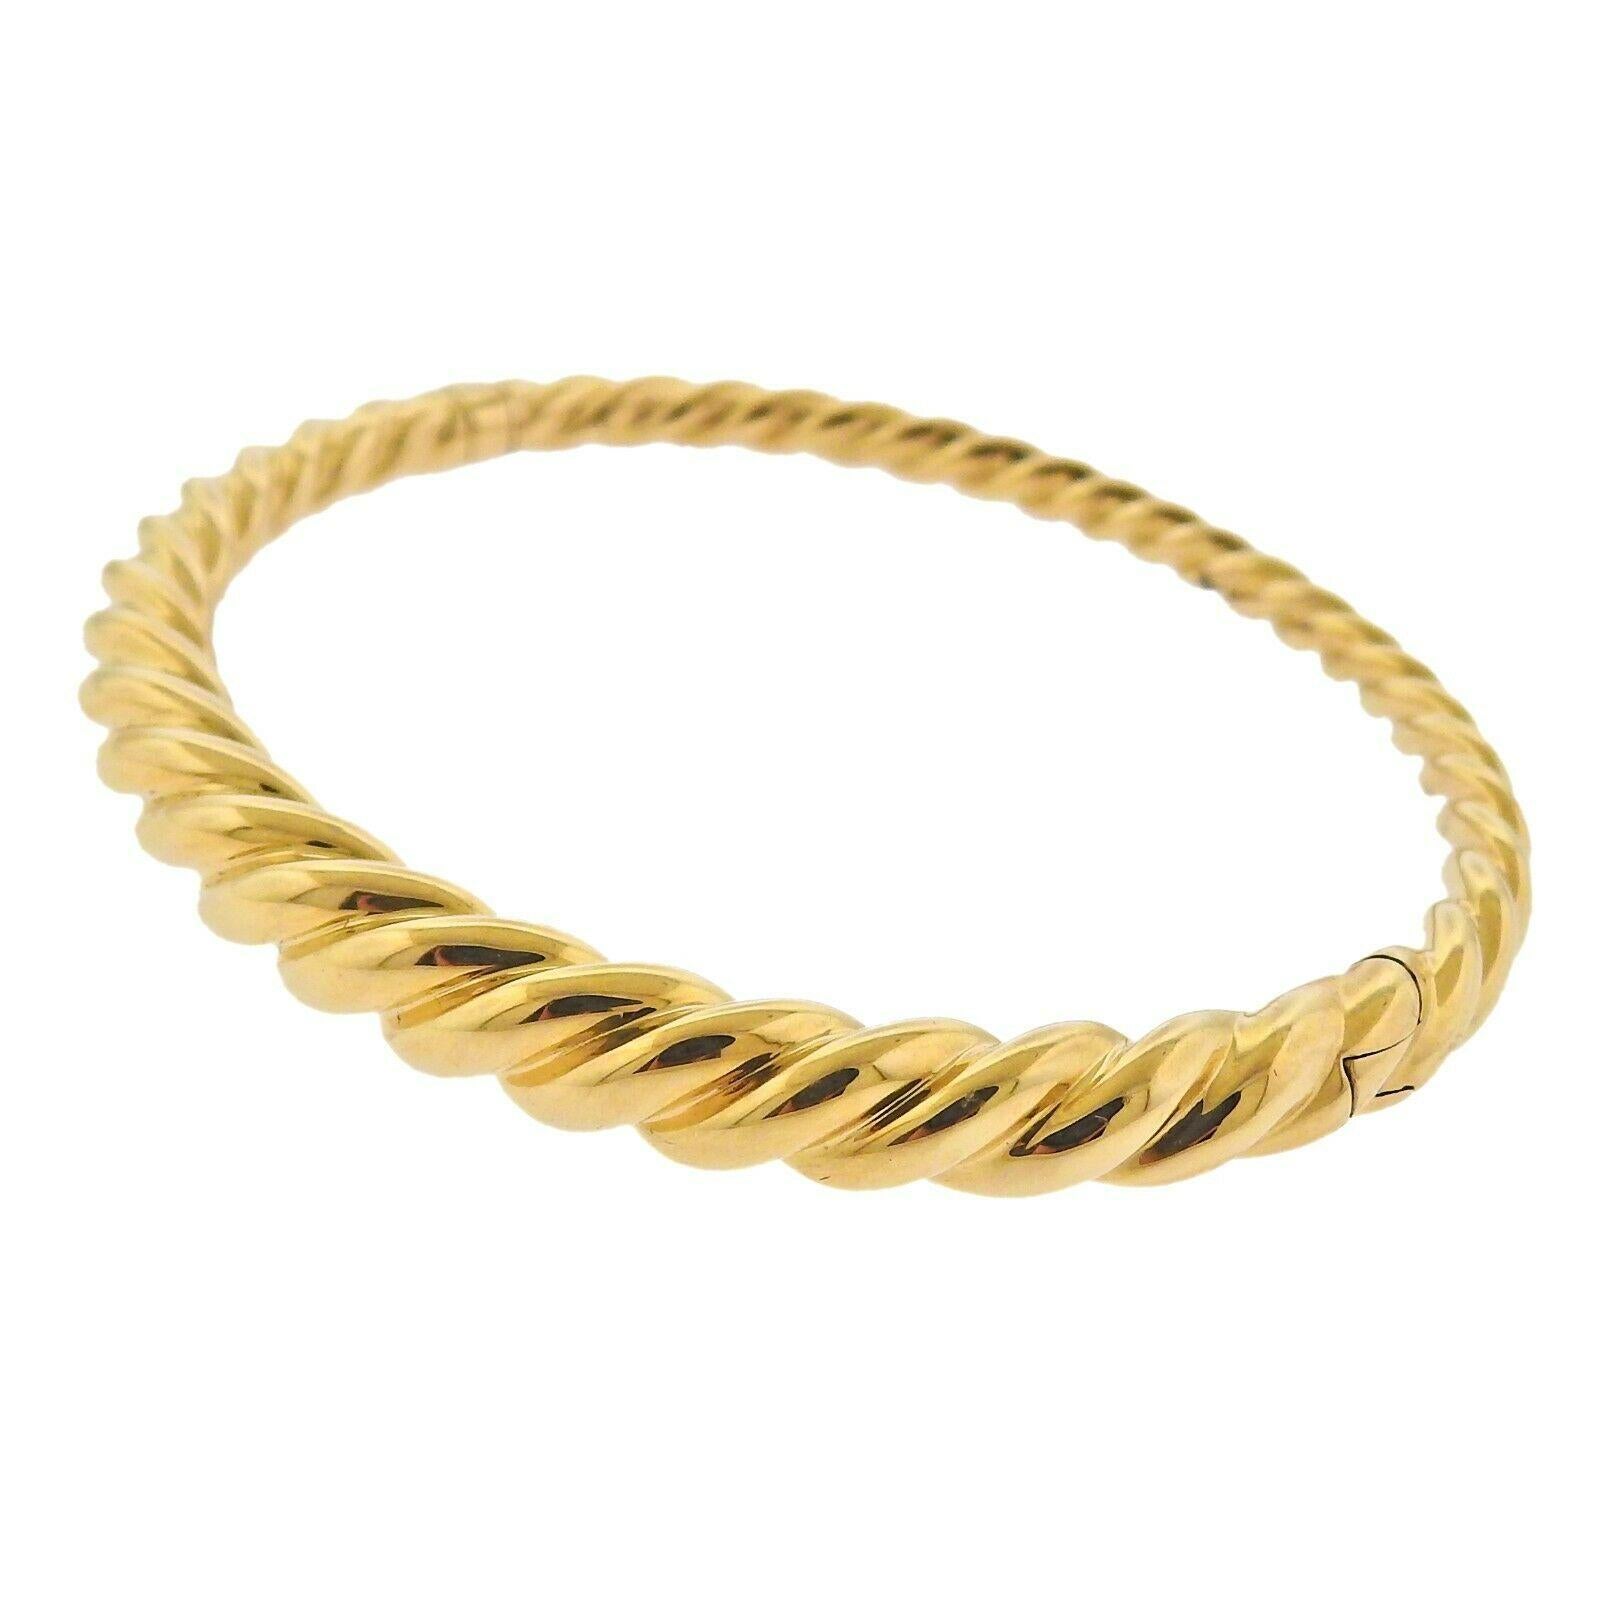 New 18k yellow gold Pure Form bangle bracelet by David Yurman. Retail $3500. Bracelet will fit approx. 7